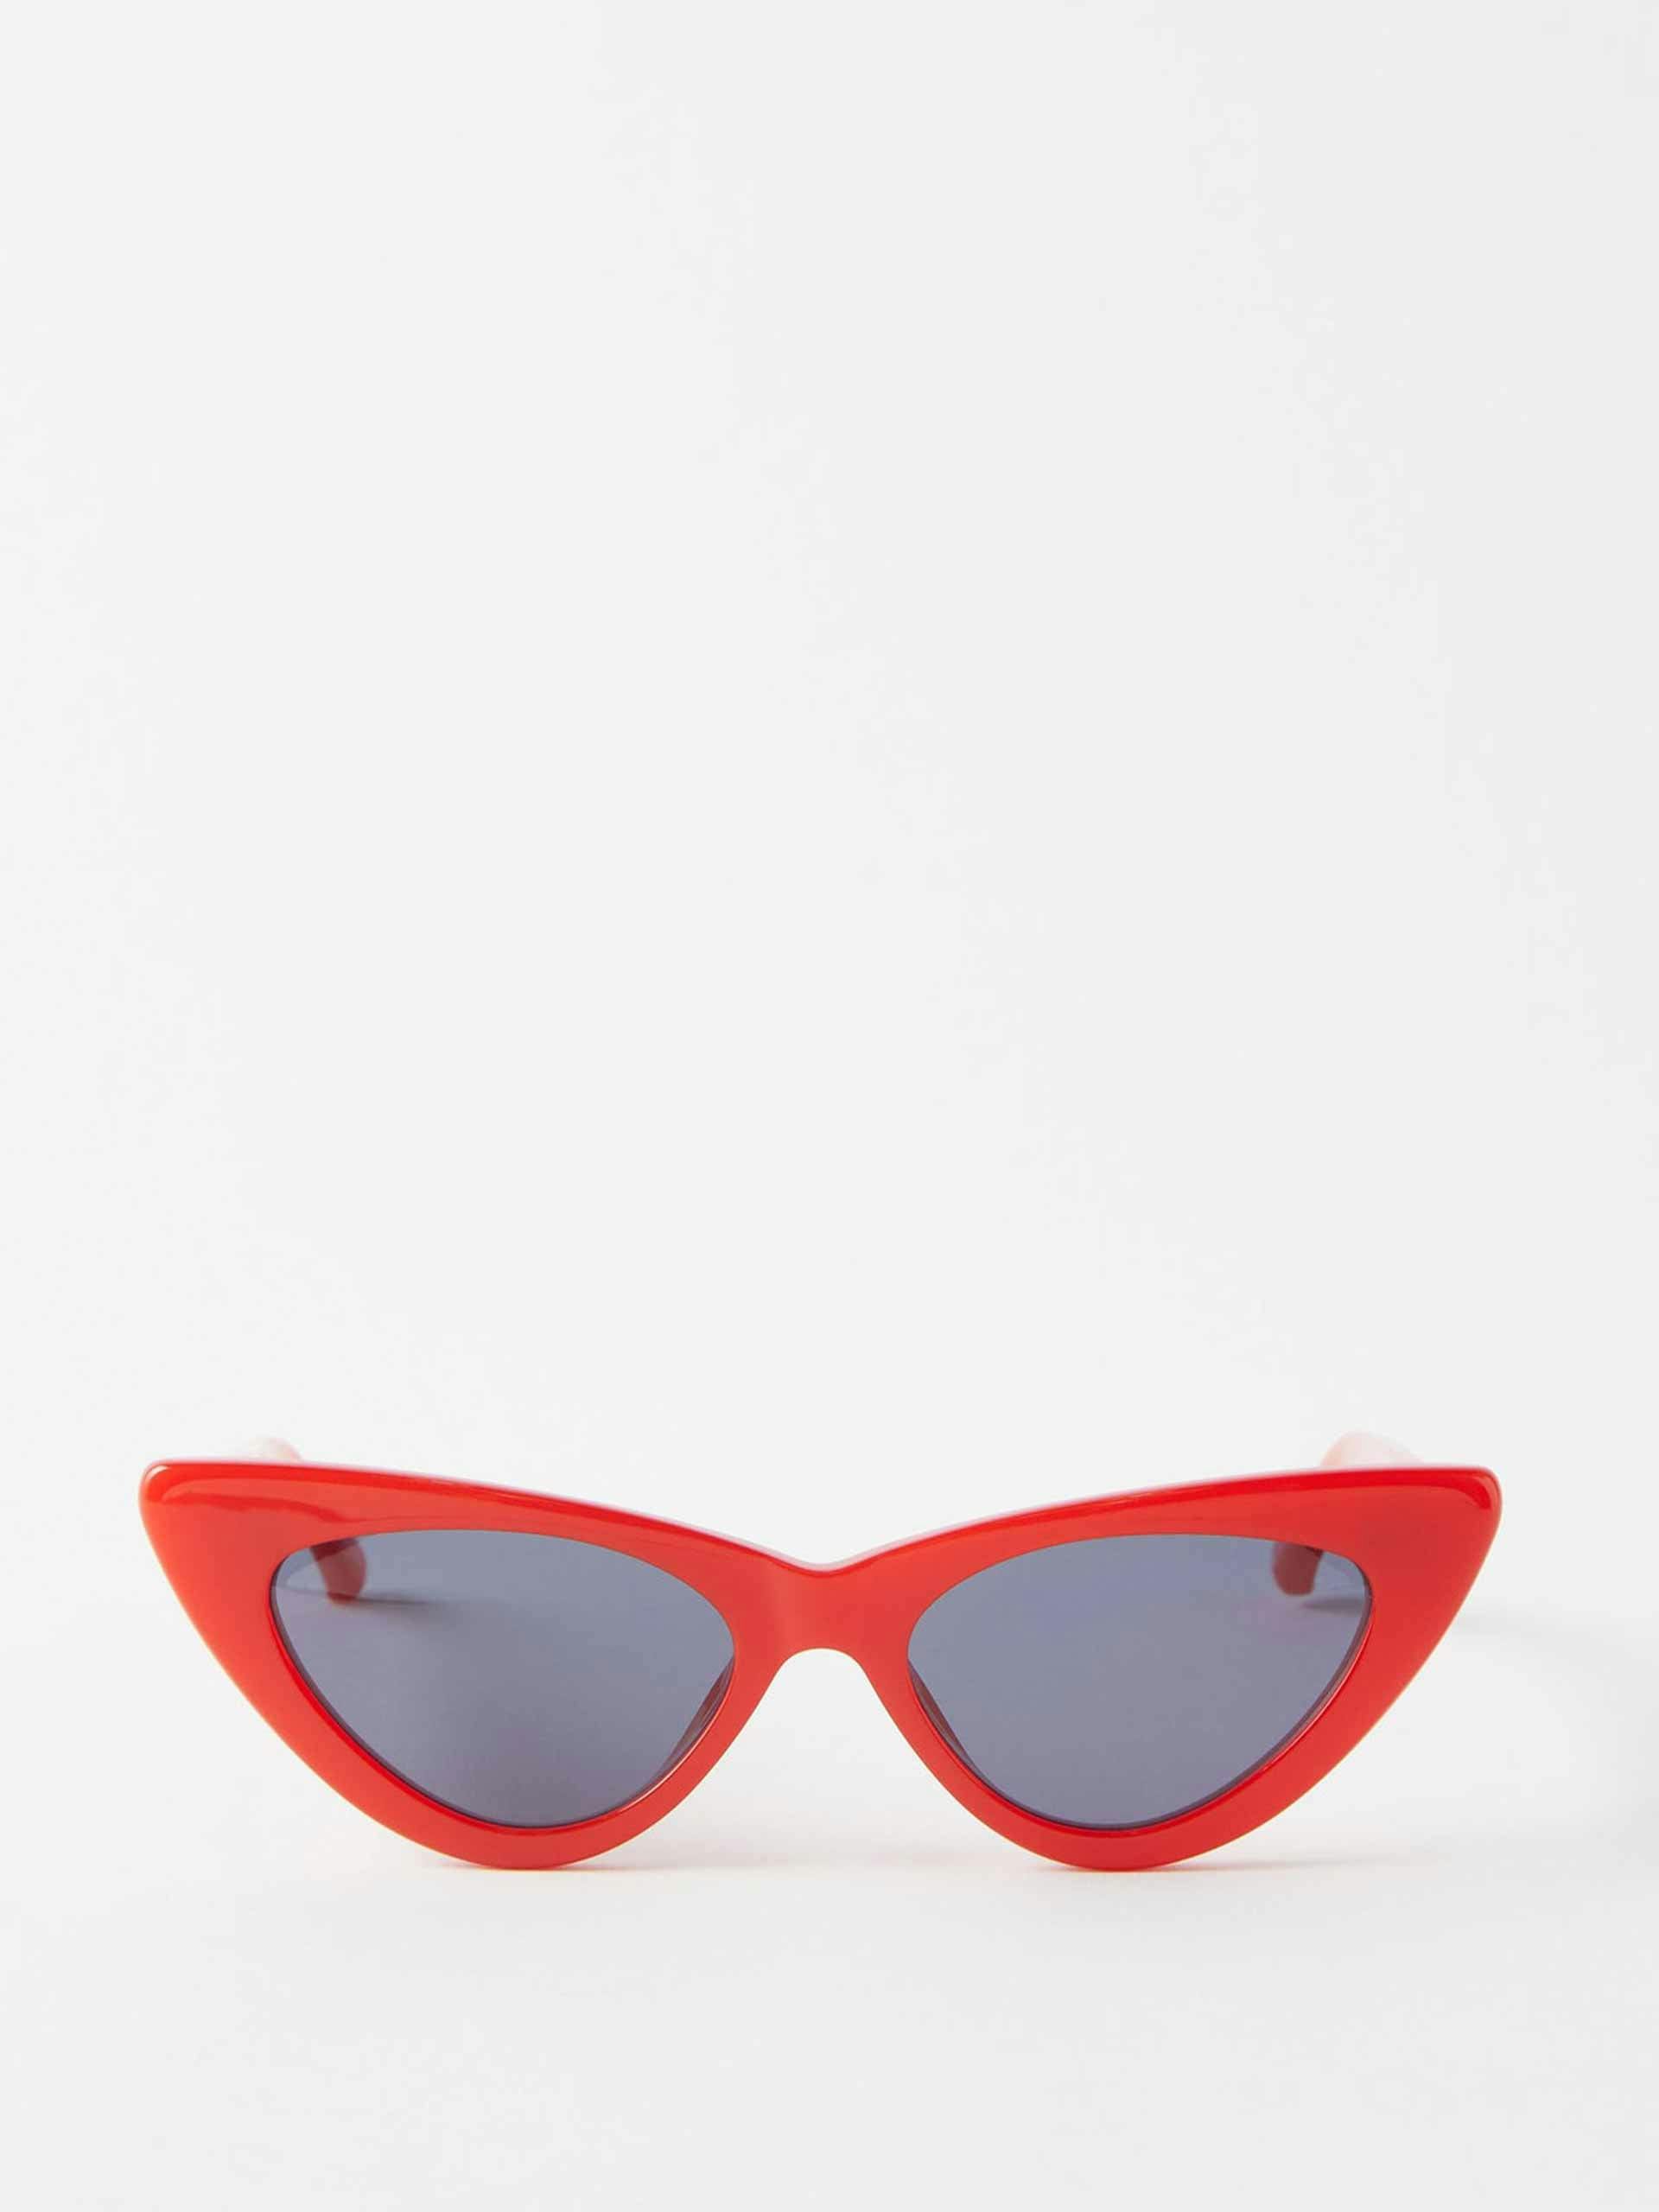 Red cat-eye sunglasses